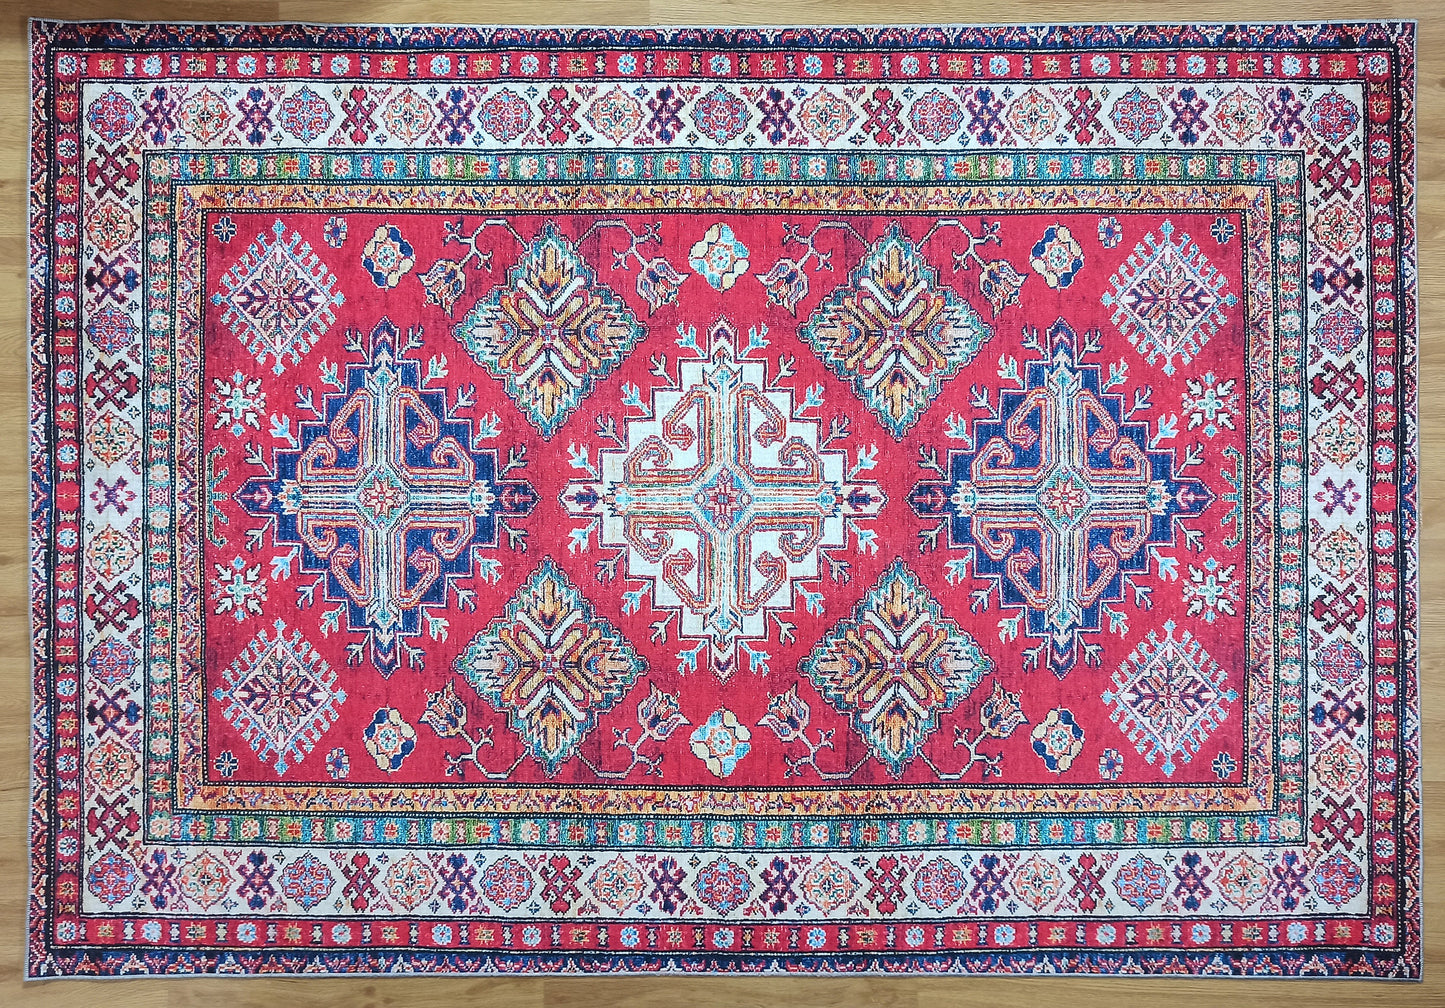 SADA | Turkish rug, Red Vintage Distressed look, Area rug, Bohemian Geometric Mid-century Home decoration, Medallion design floral carpet